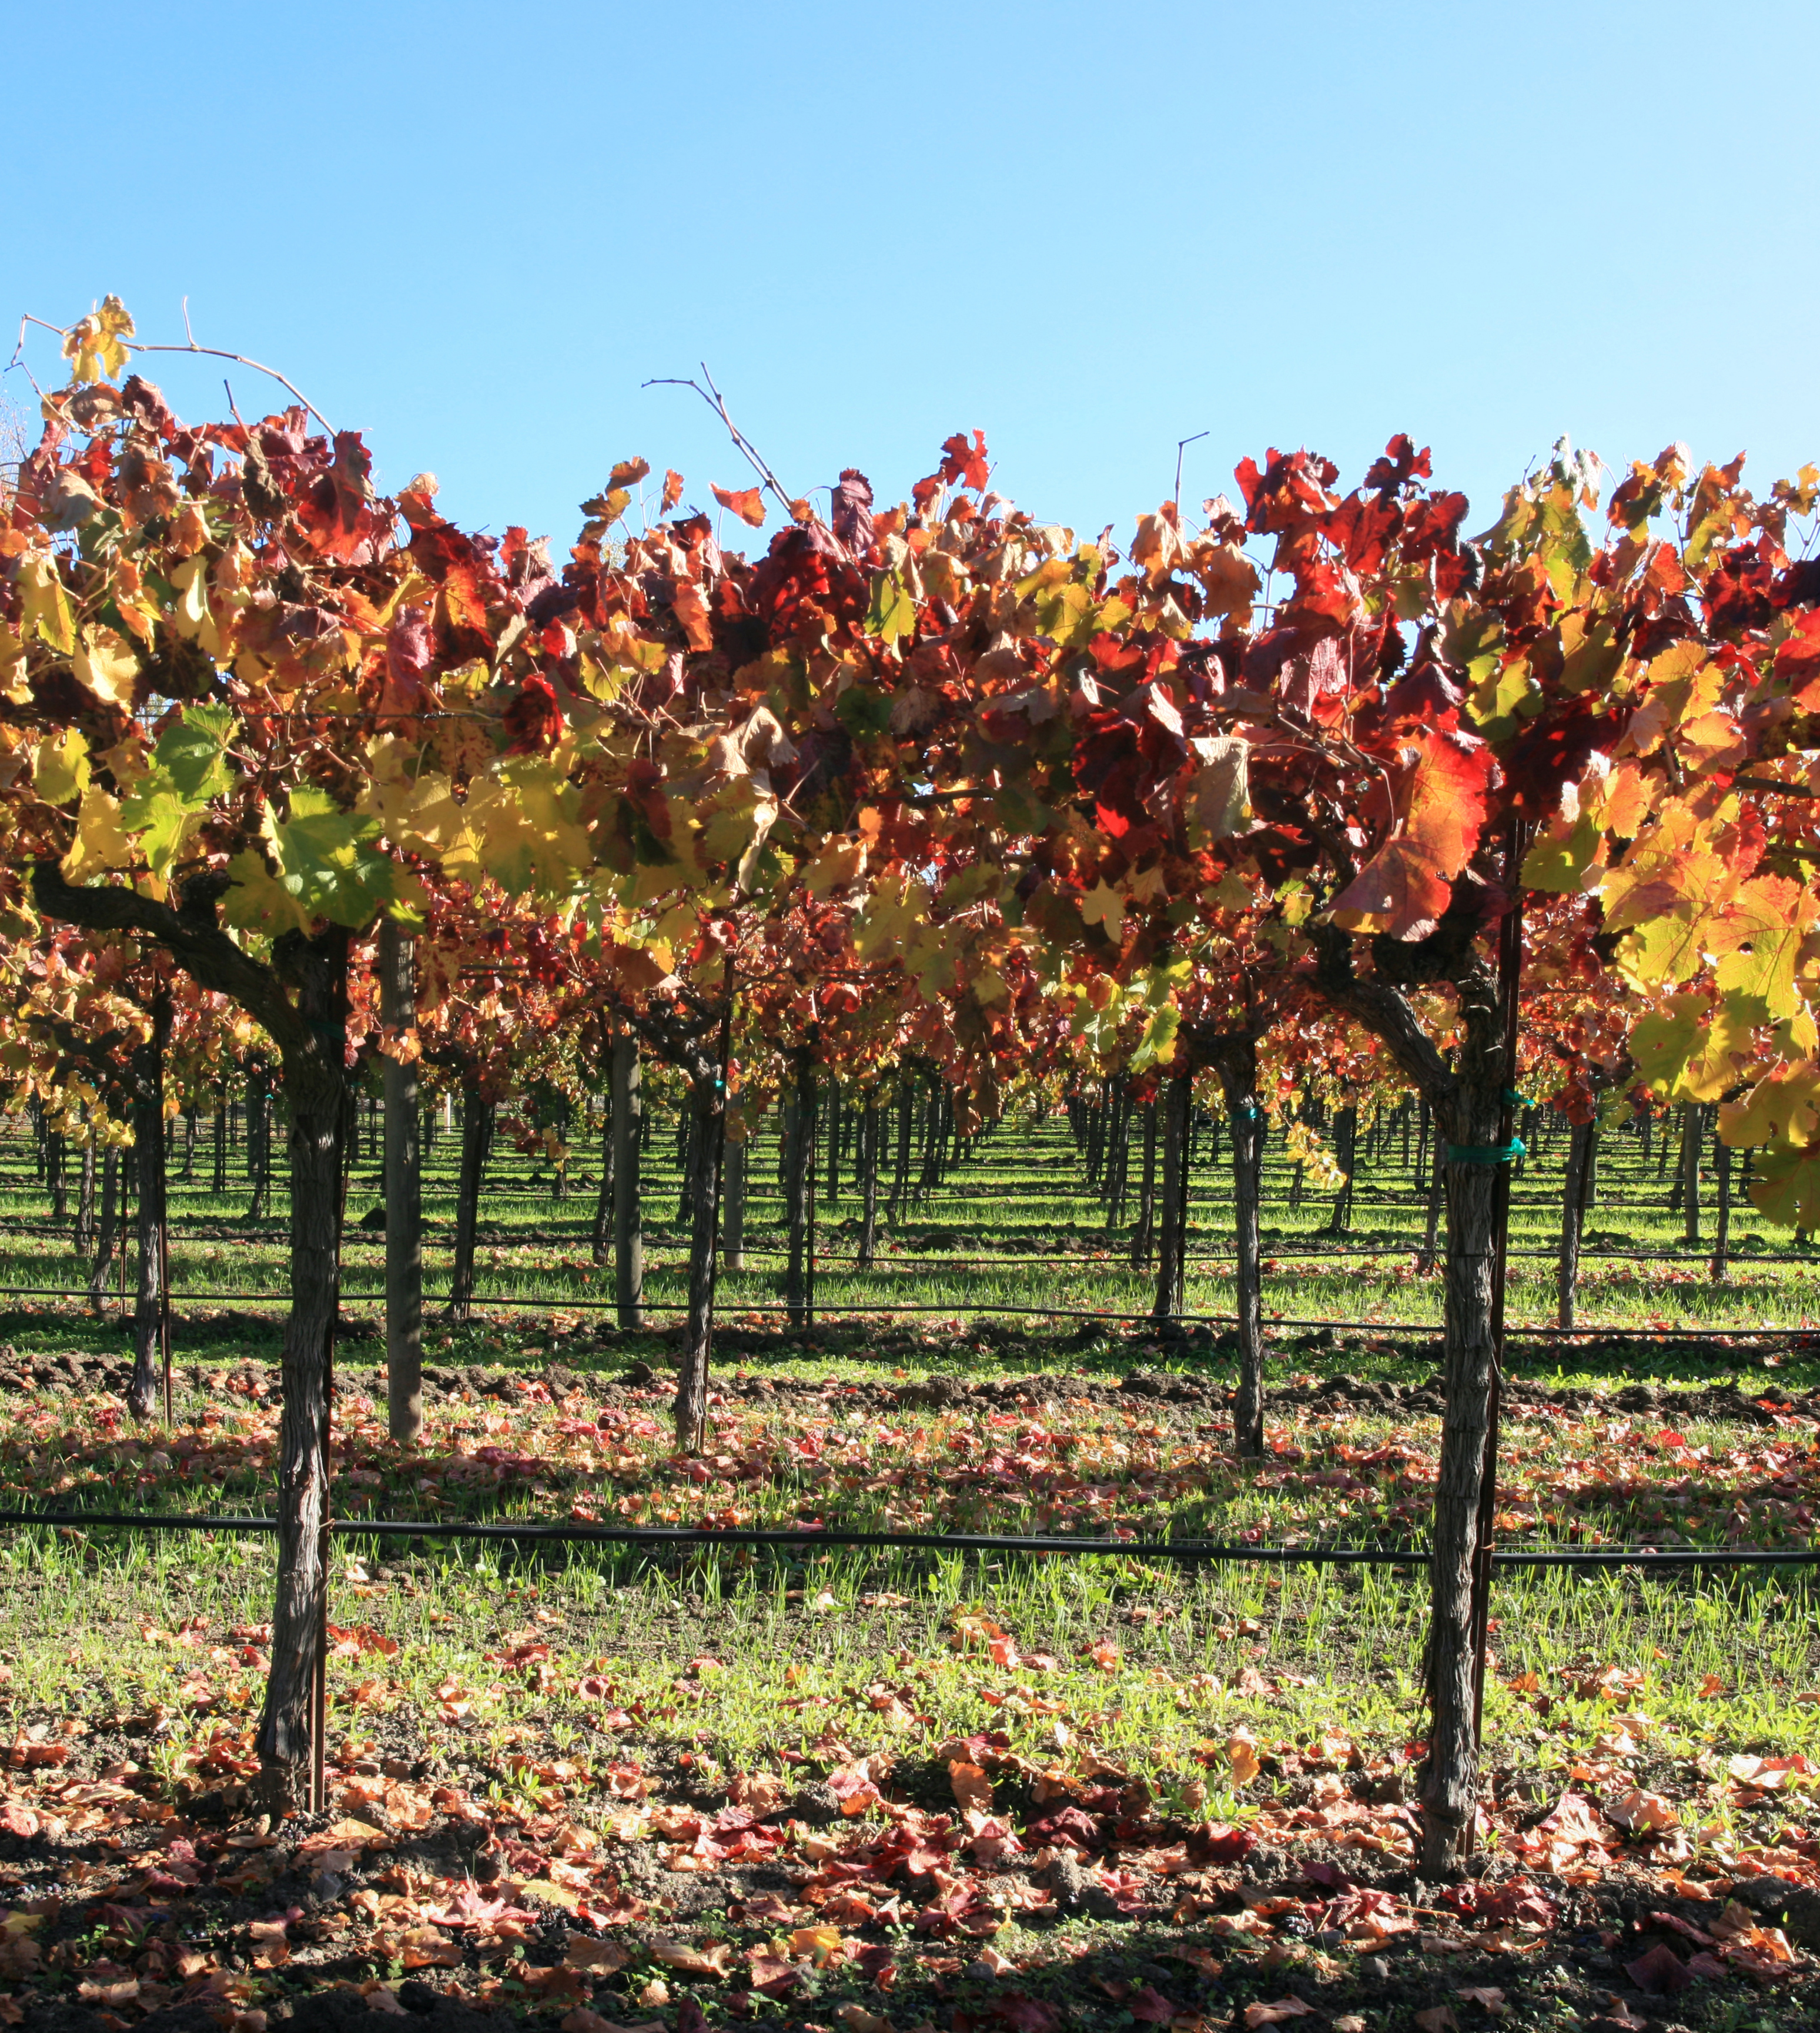 File:Autumn vineyard in Napa Valley 2.jpg - Wikimedia Commons